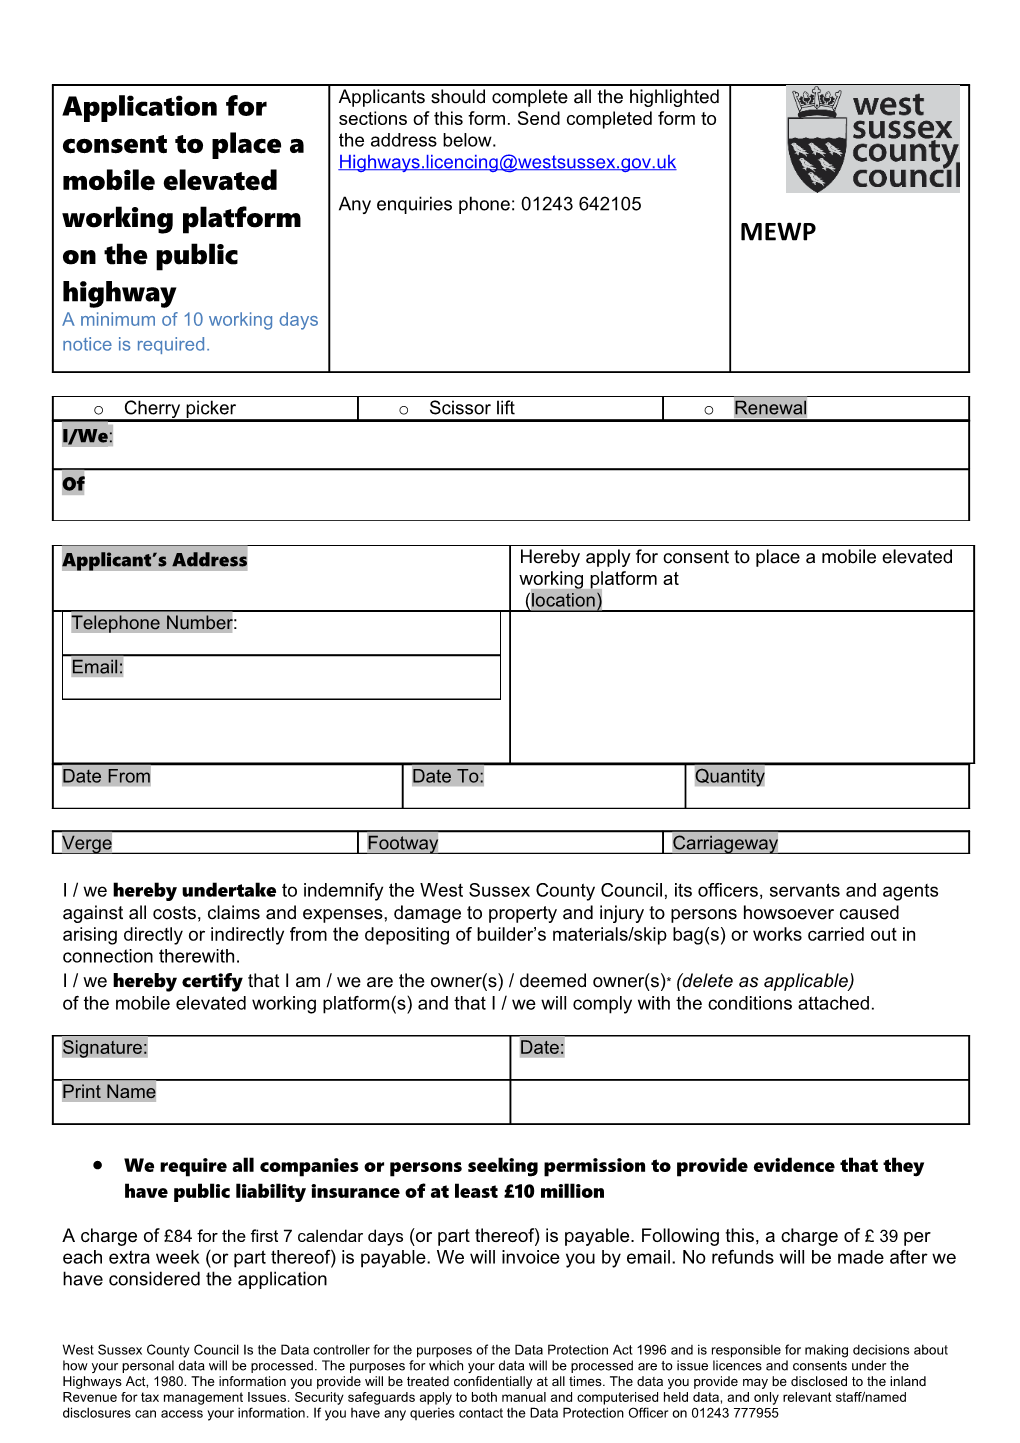 MEWP Application Form